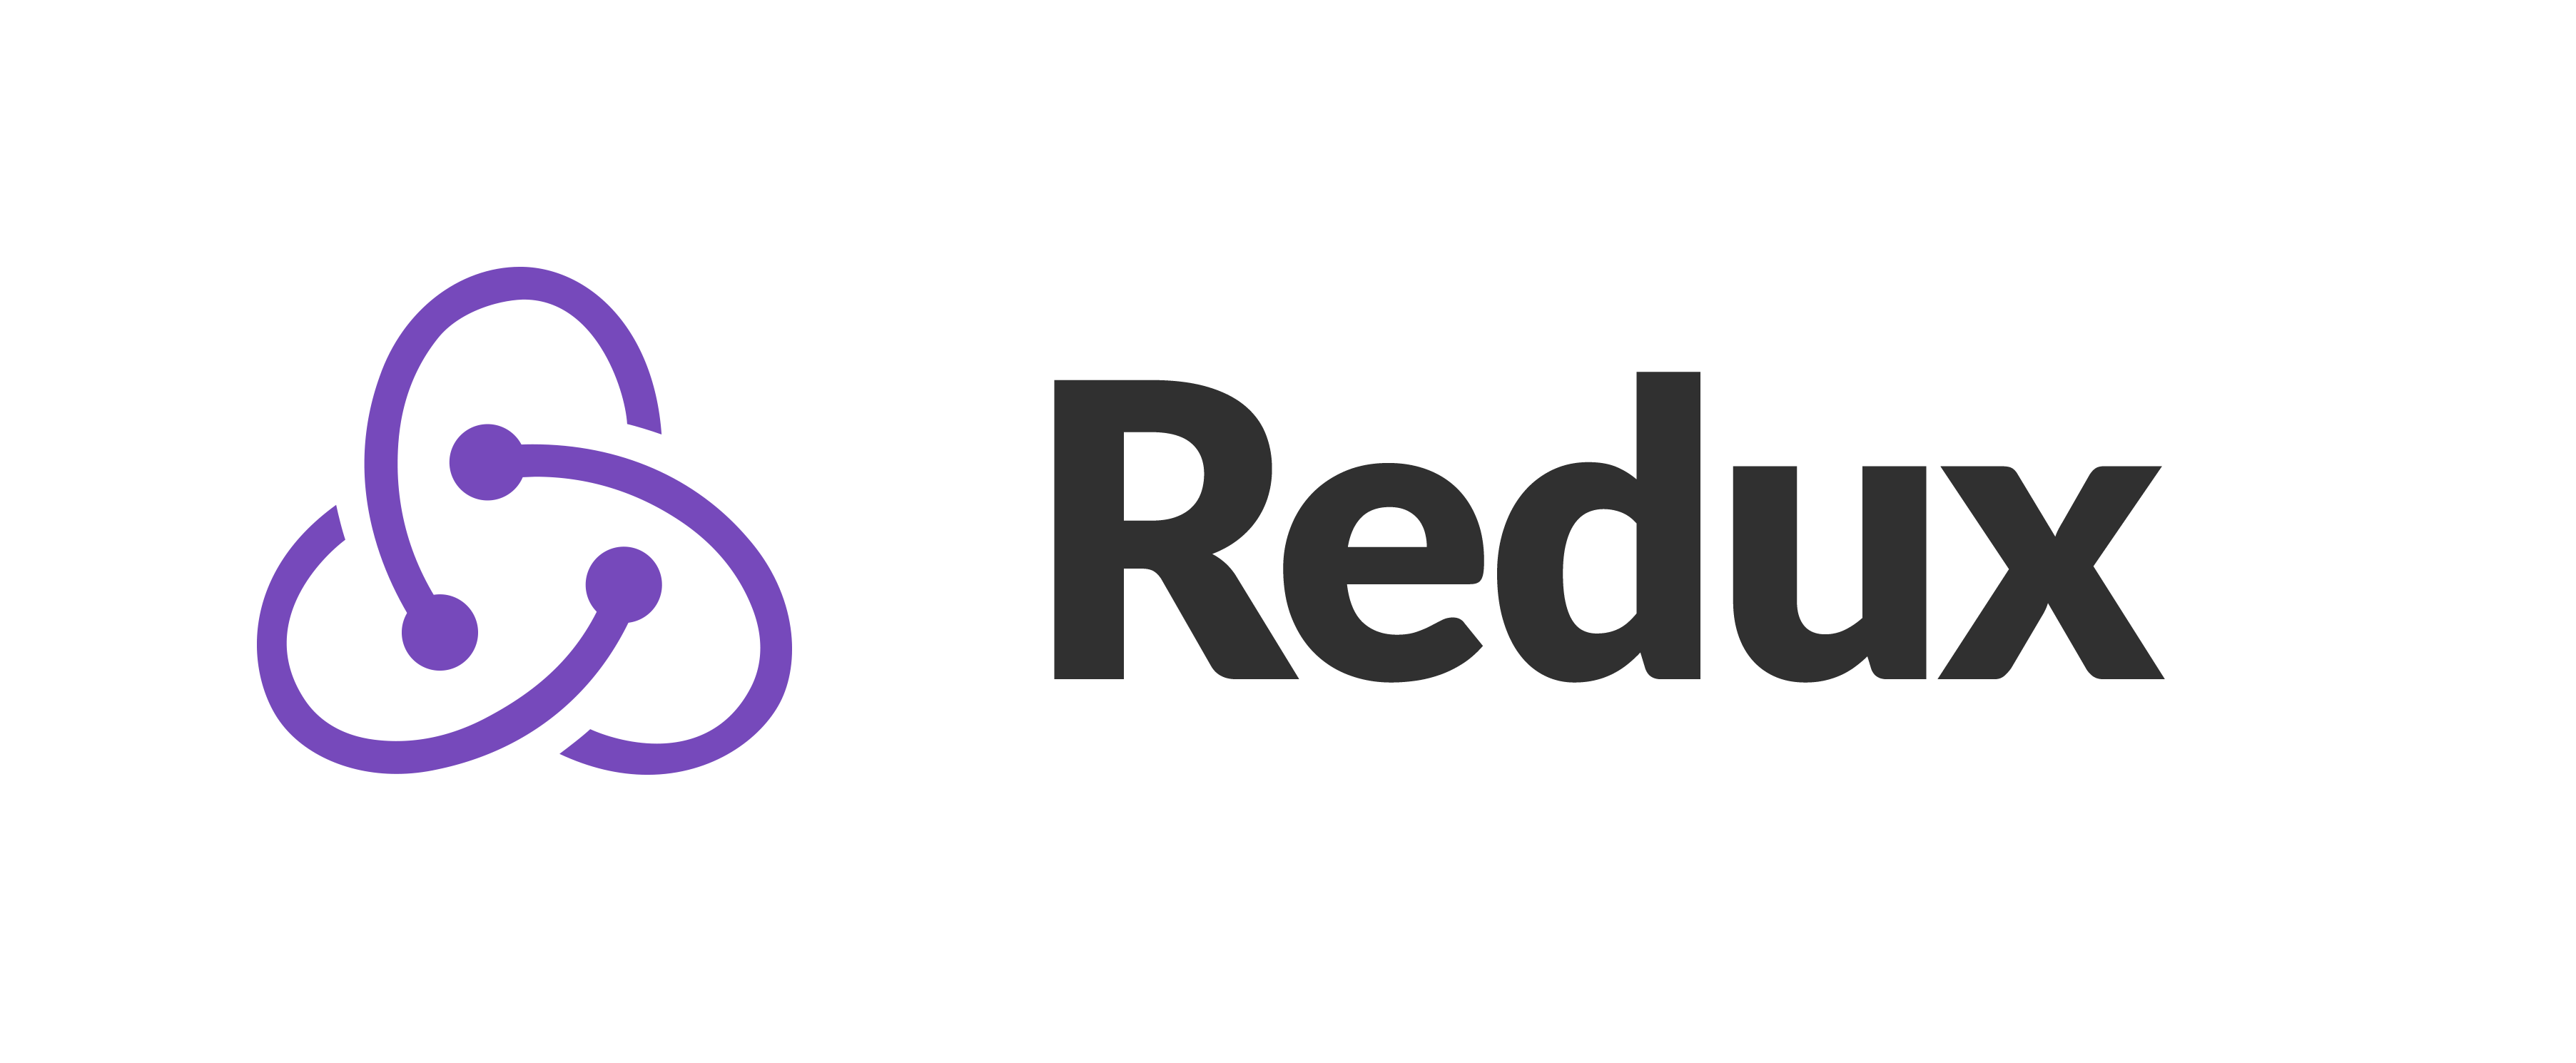 Redux هي حاوية لحالة التّطبيق قابلة للتّوقّع